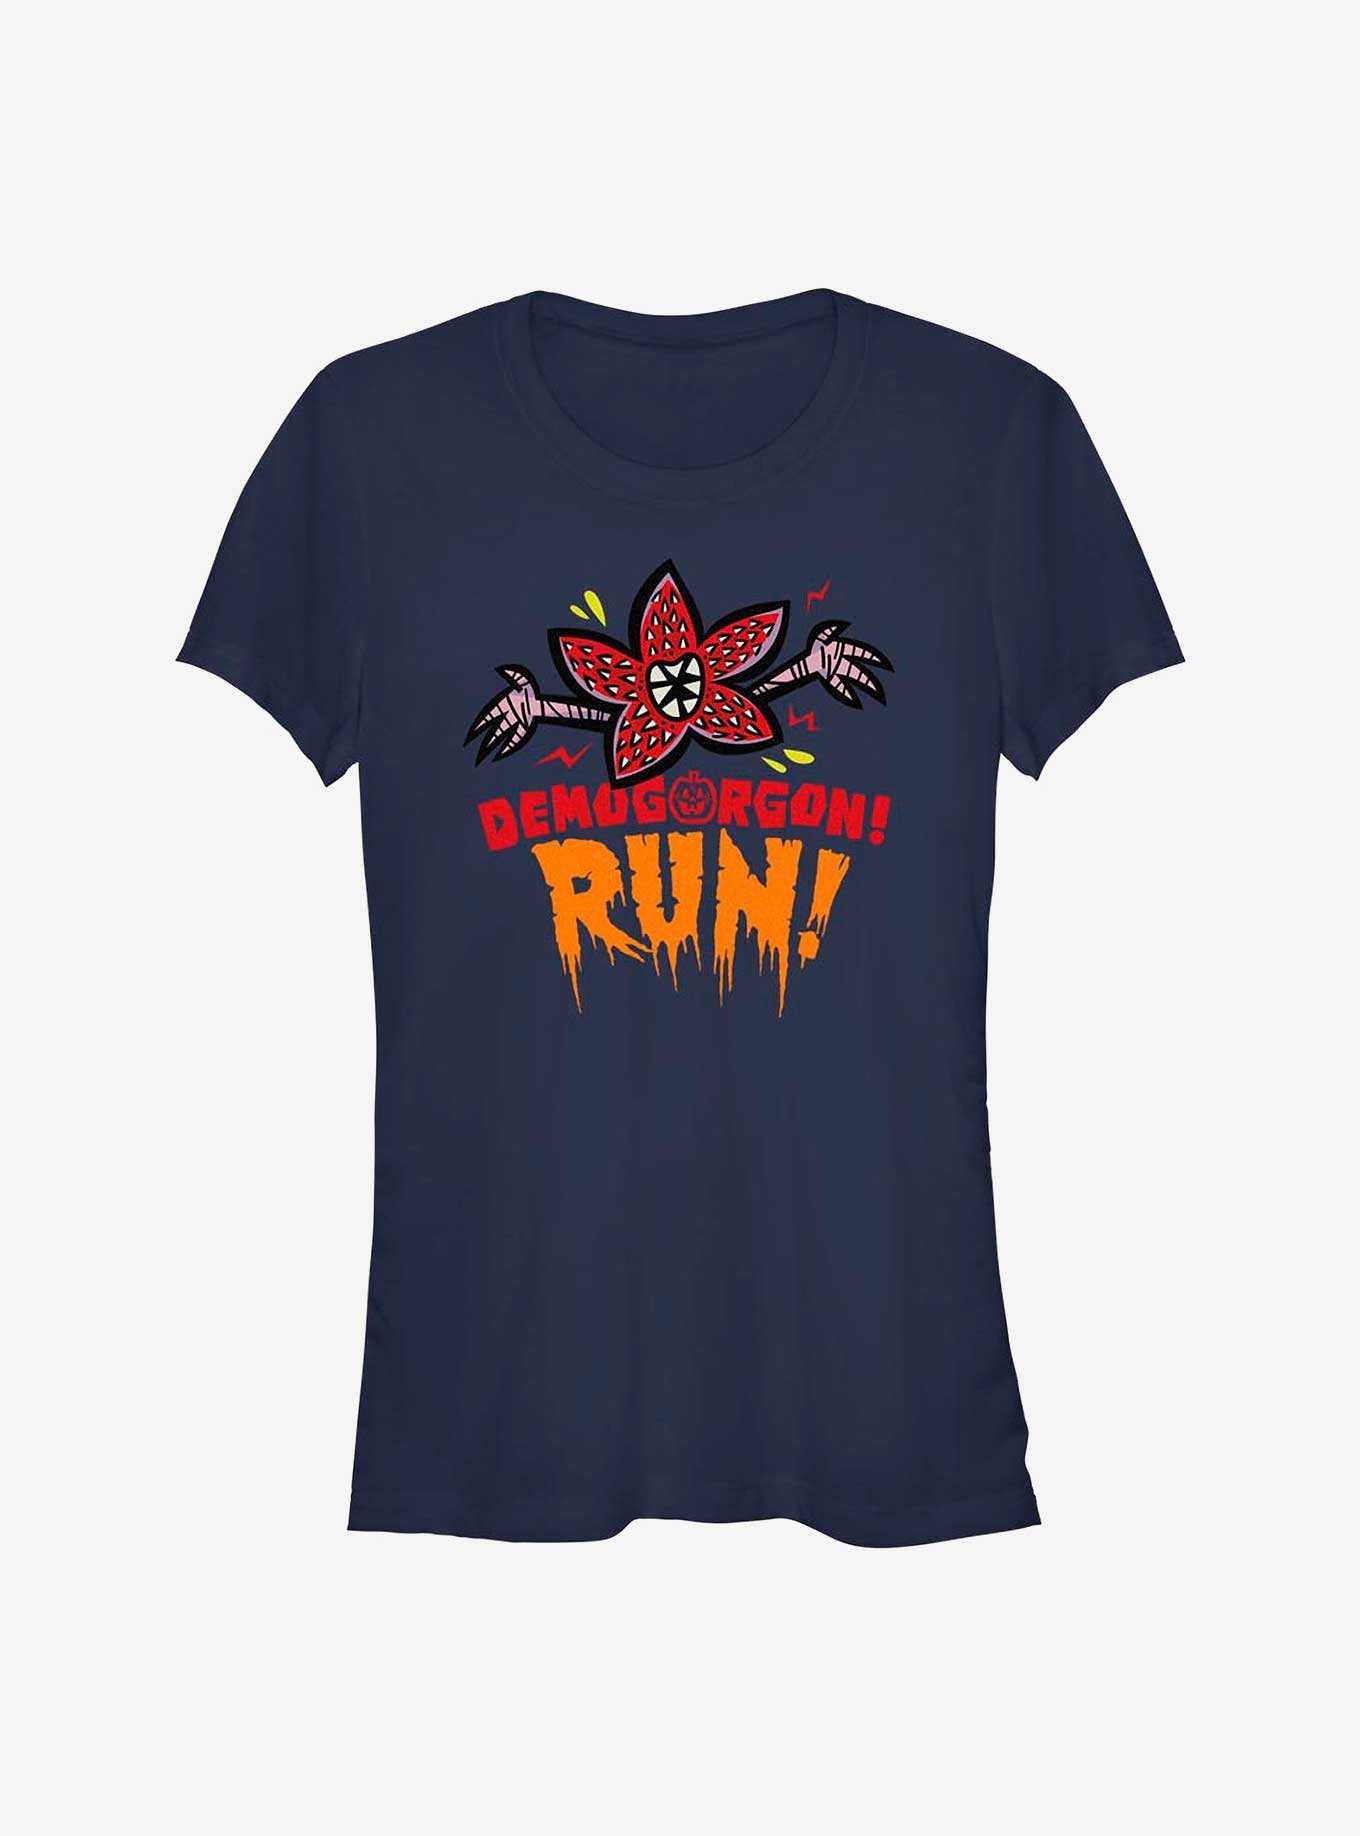 Stranger Things Demogorgon! Run! Girls T-Shirt, , hi-res